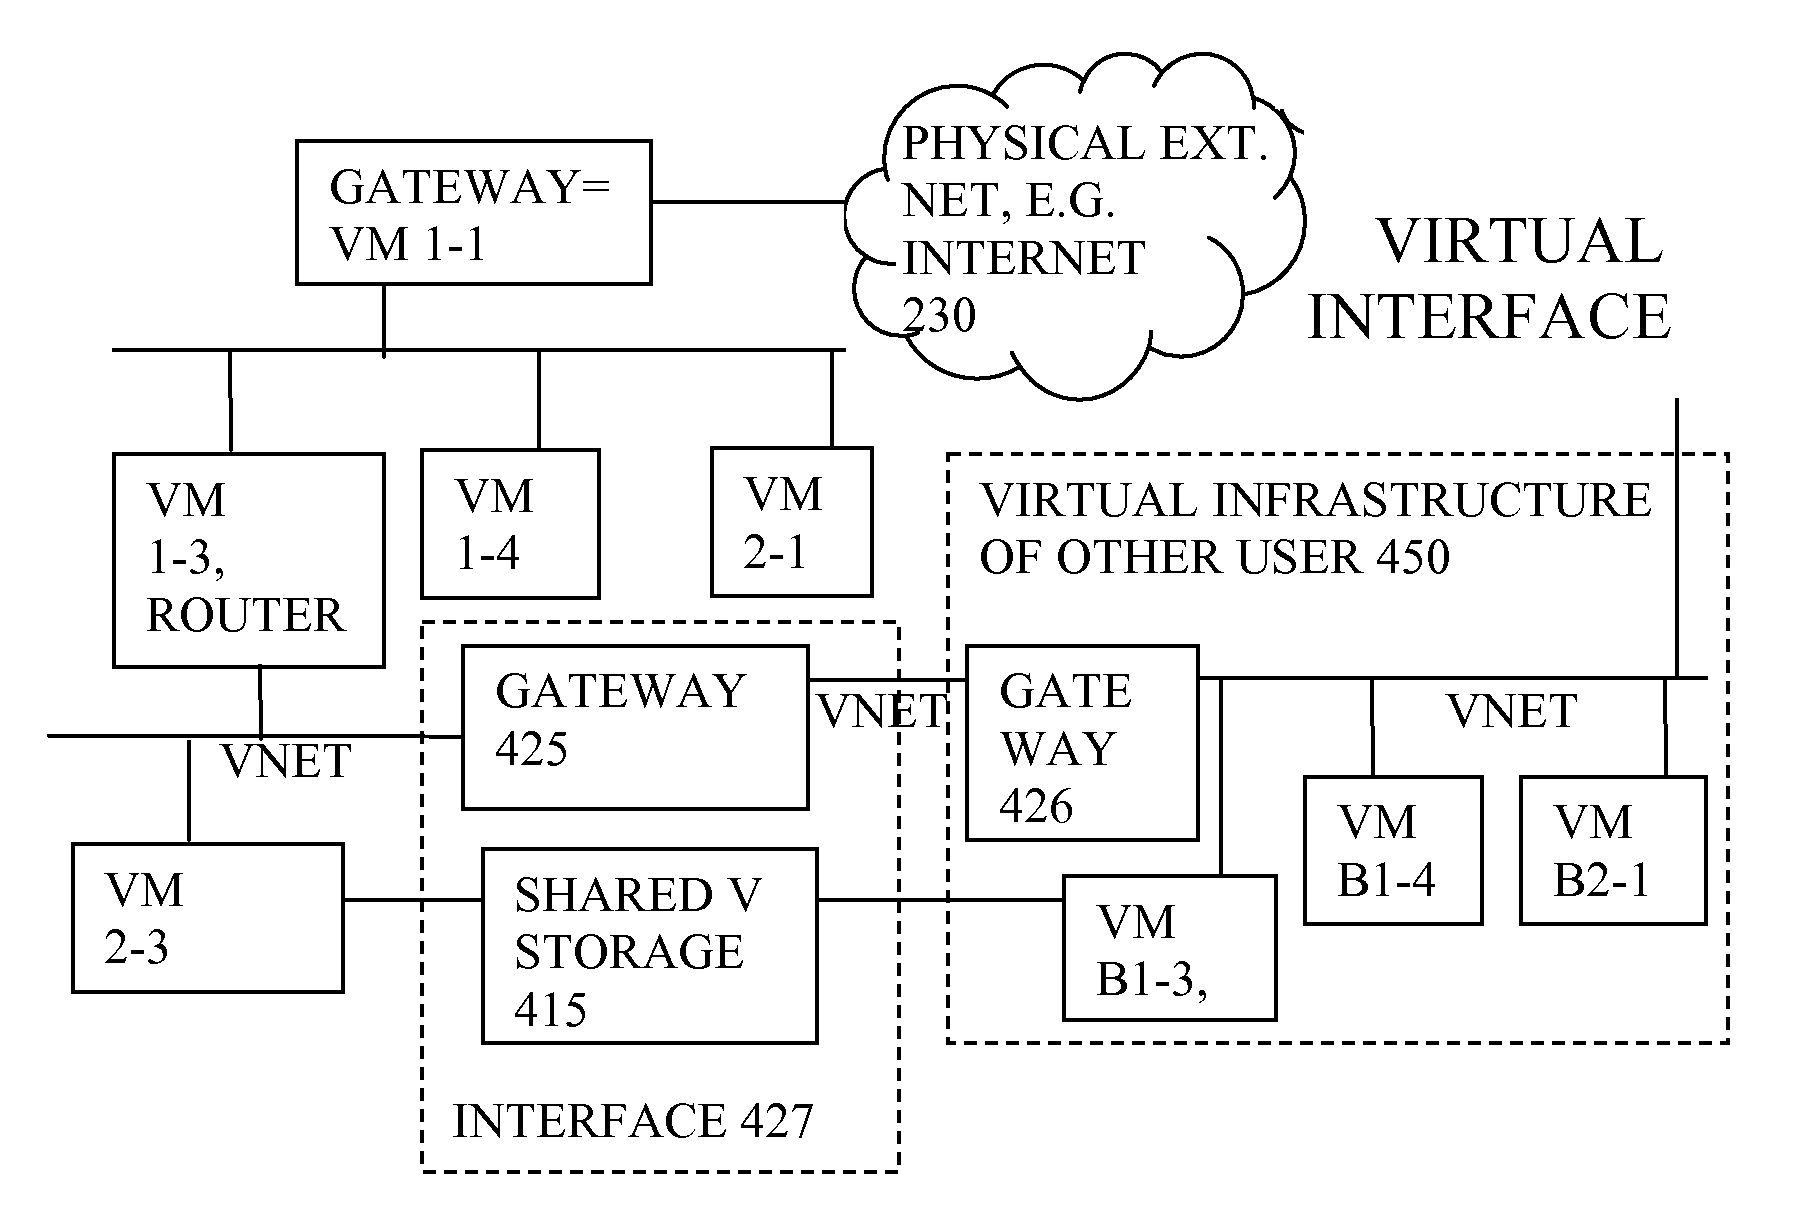 Virtual computing infrastructure